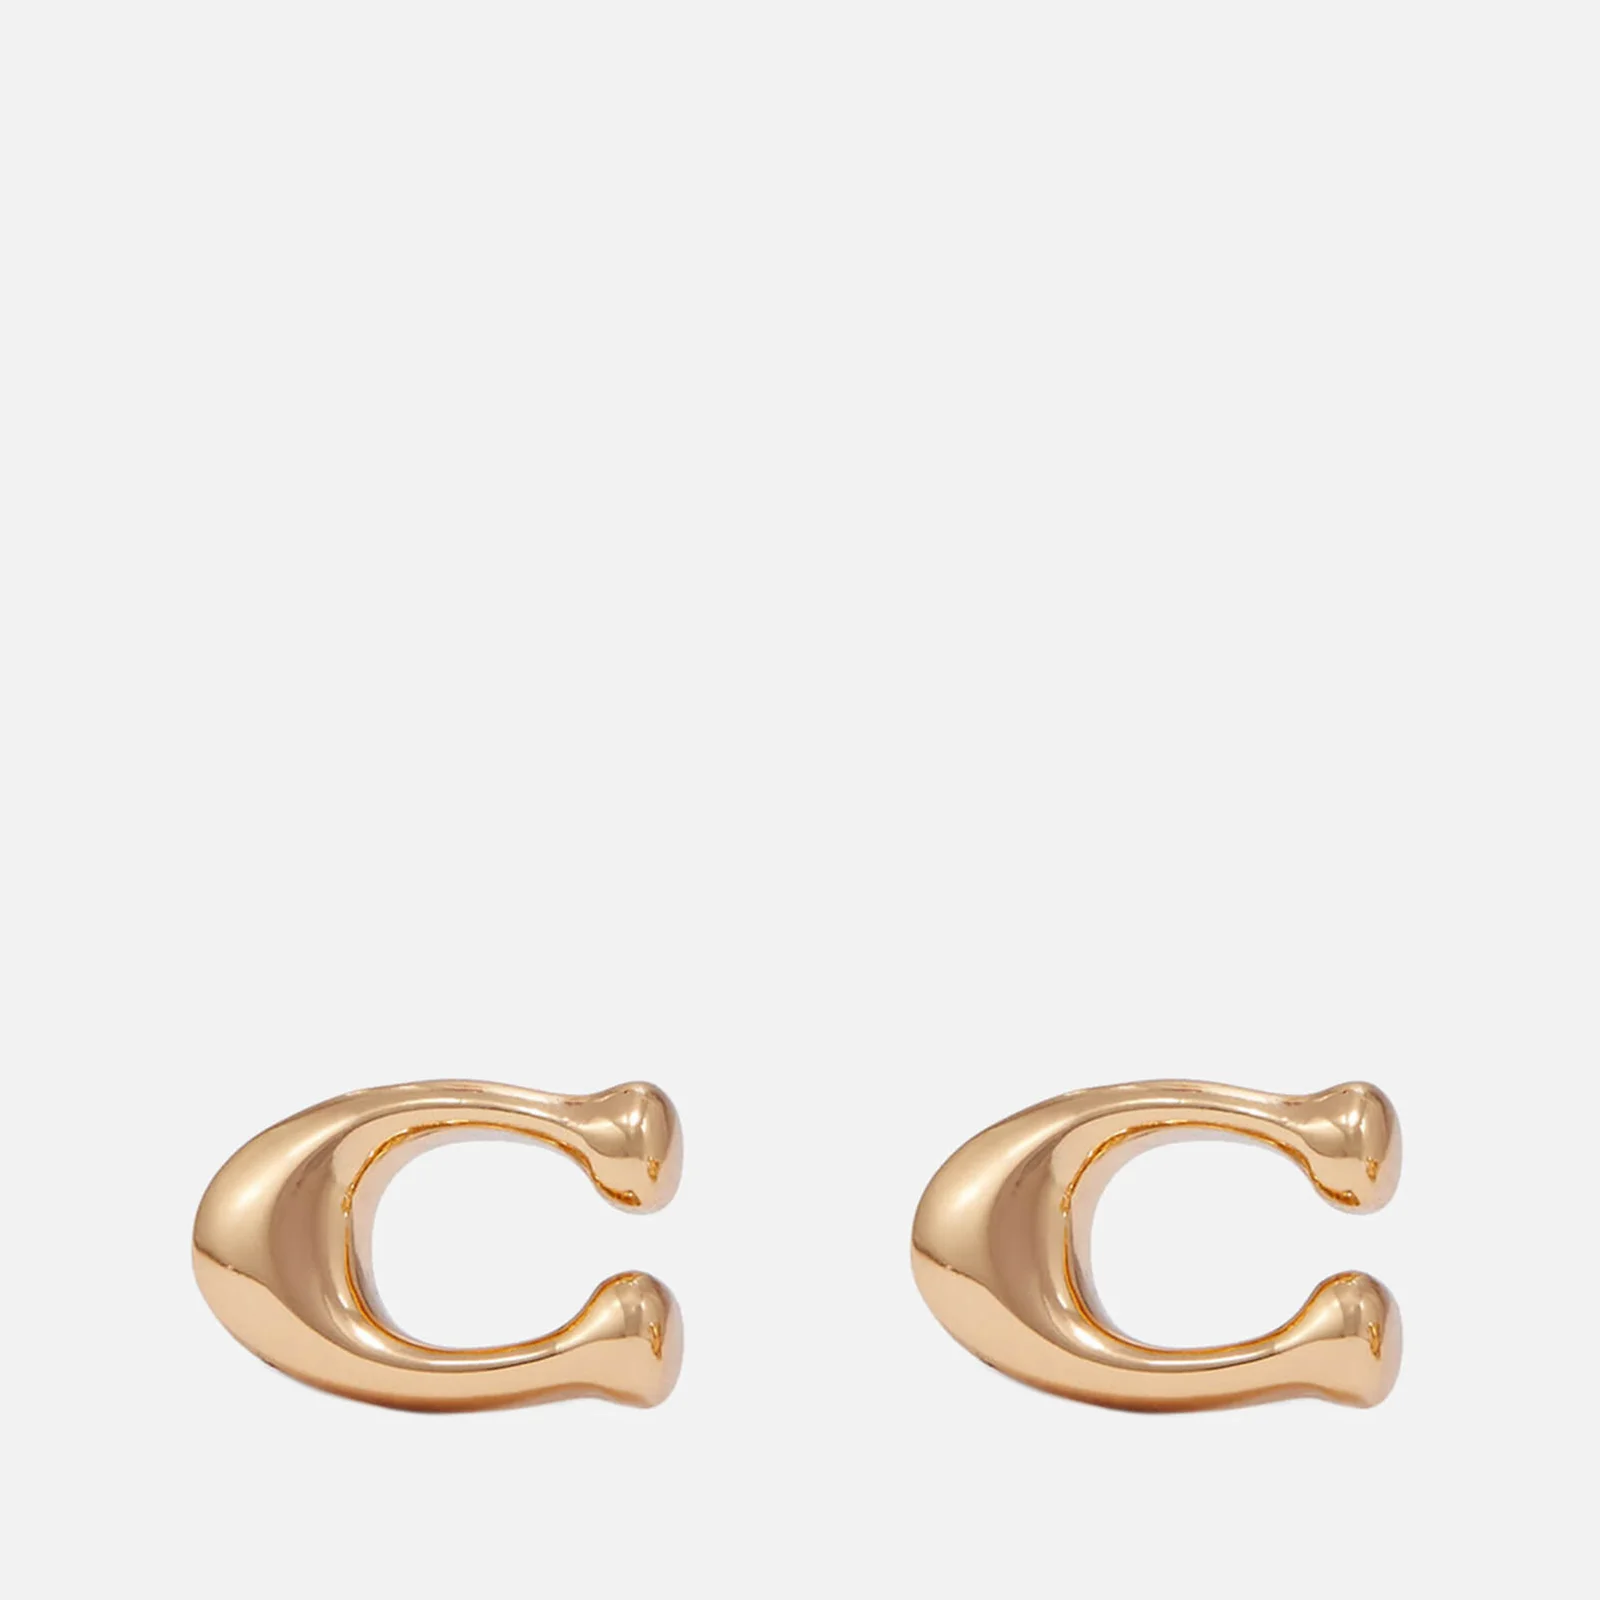 Coach Bubble C Gold-Tone Earrings Image 1